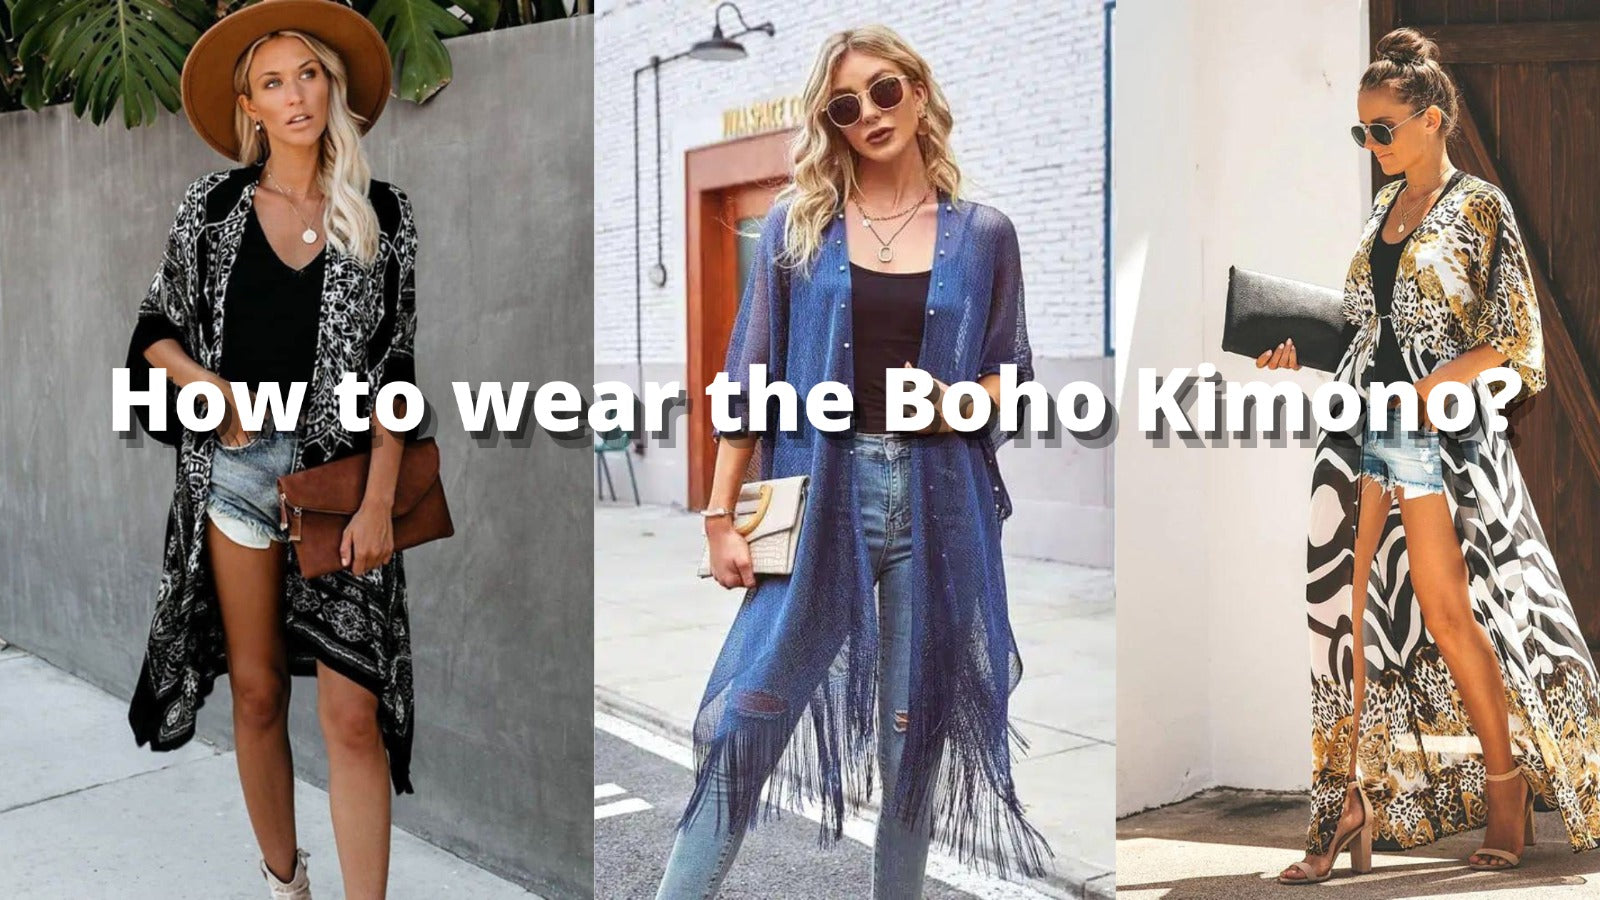 How to wear the Boho Kimono?